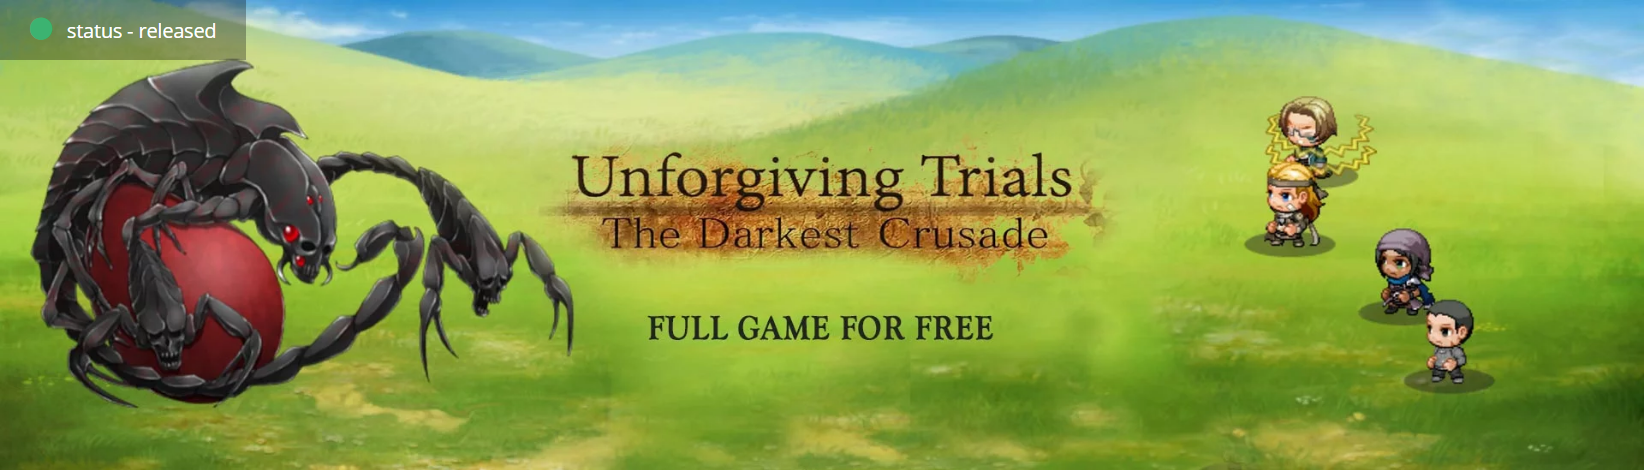 Screenshot_2019-10-02 Unforgiving Trials The Darkest Crusade Indiegala Developers.png